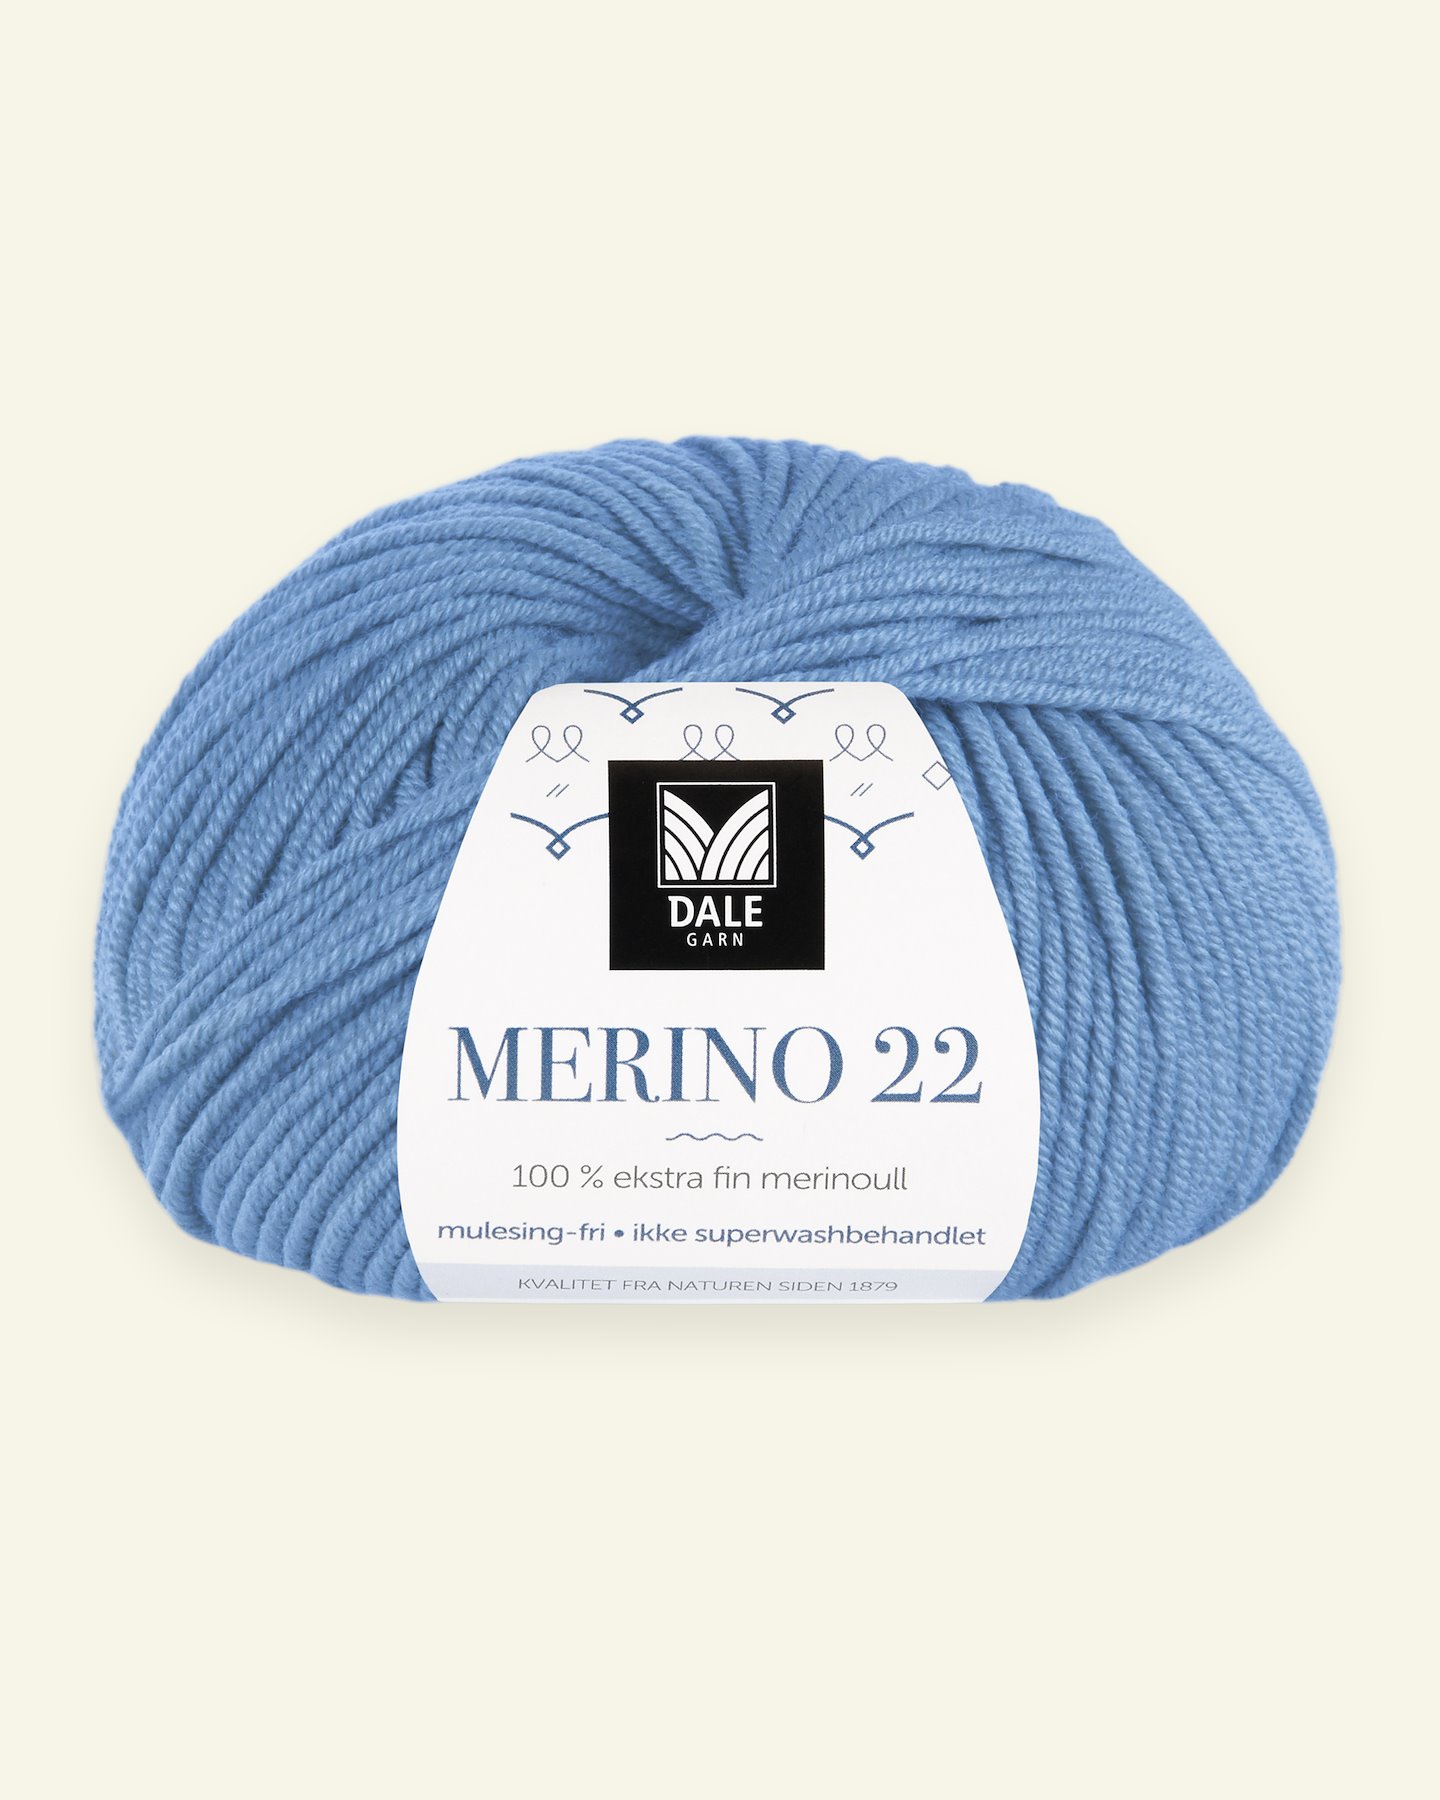 Dale Garn, 100% extra fine merino wool yarn, "Merino 22", blue 90000389_pack